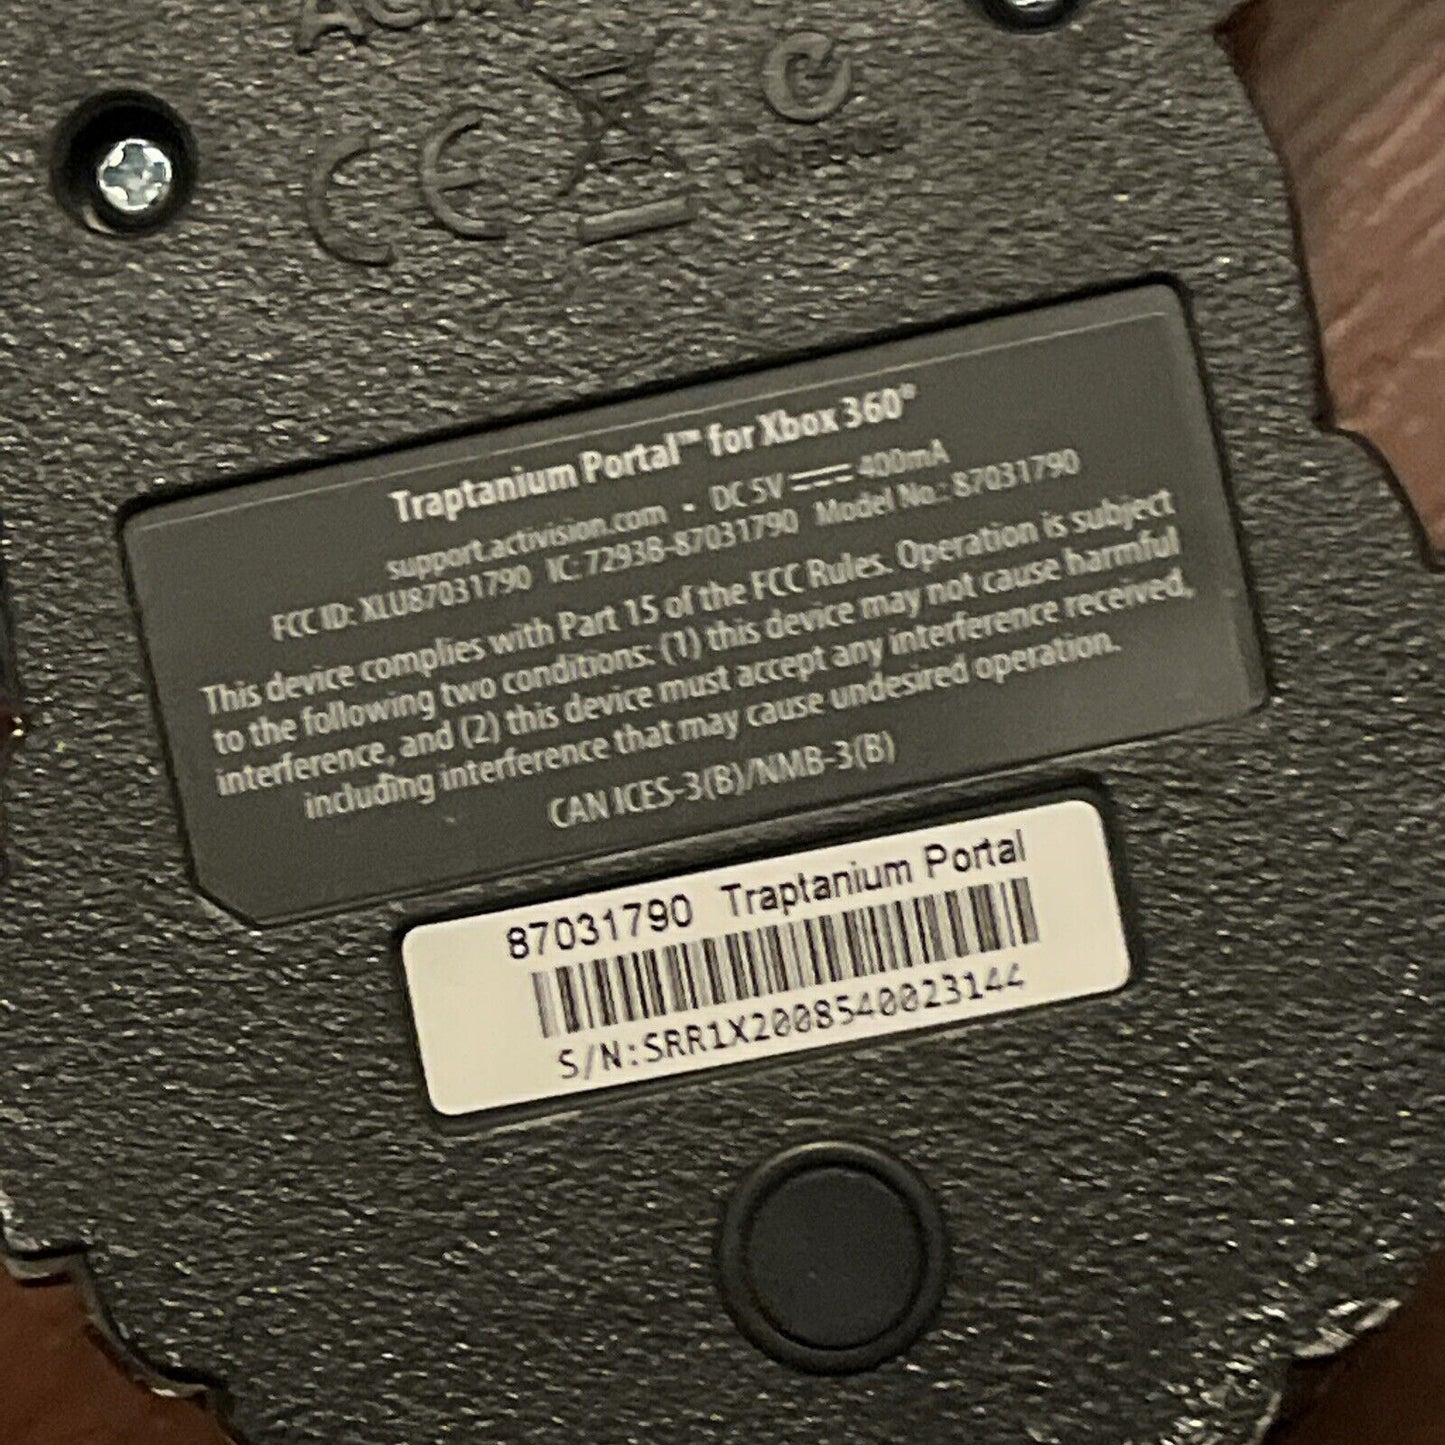 Traptanium Portal for Xbox 360 Model 87031790